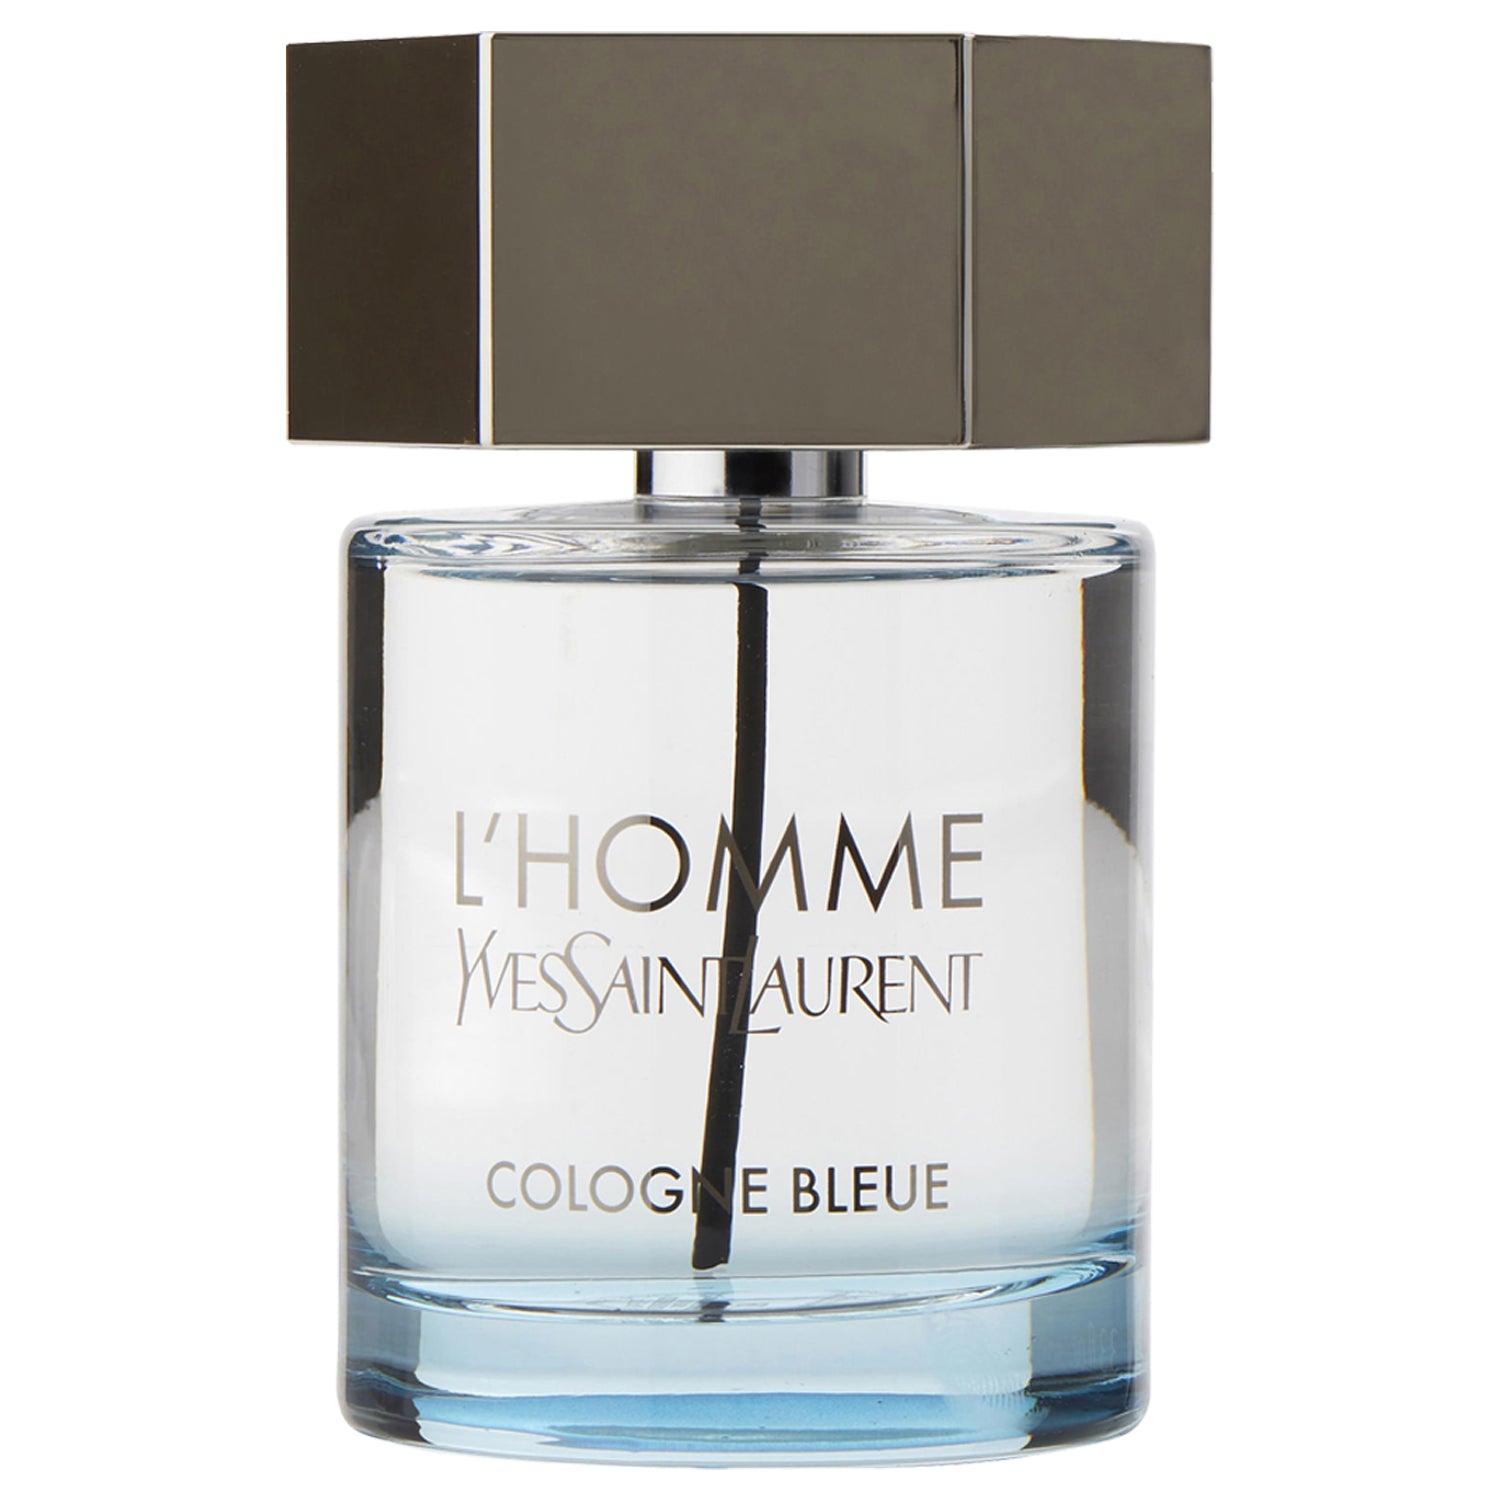 Lhomme Cologne Bleue by Yves Saint Laurent Fragrance Samples